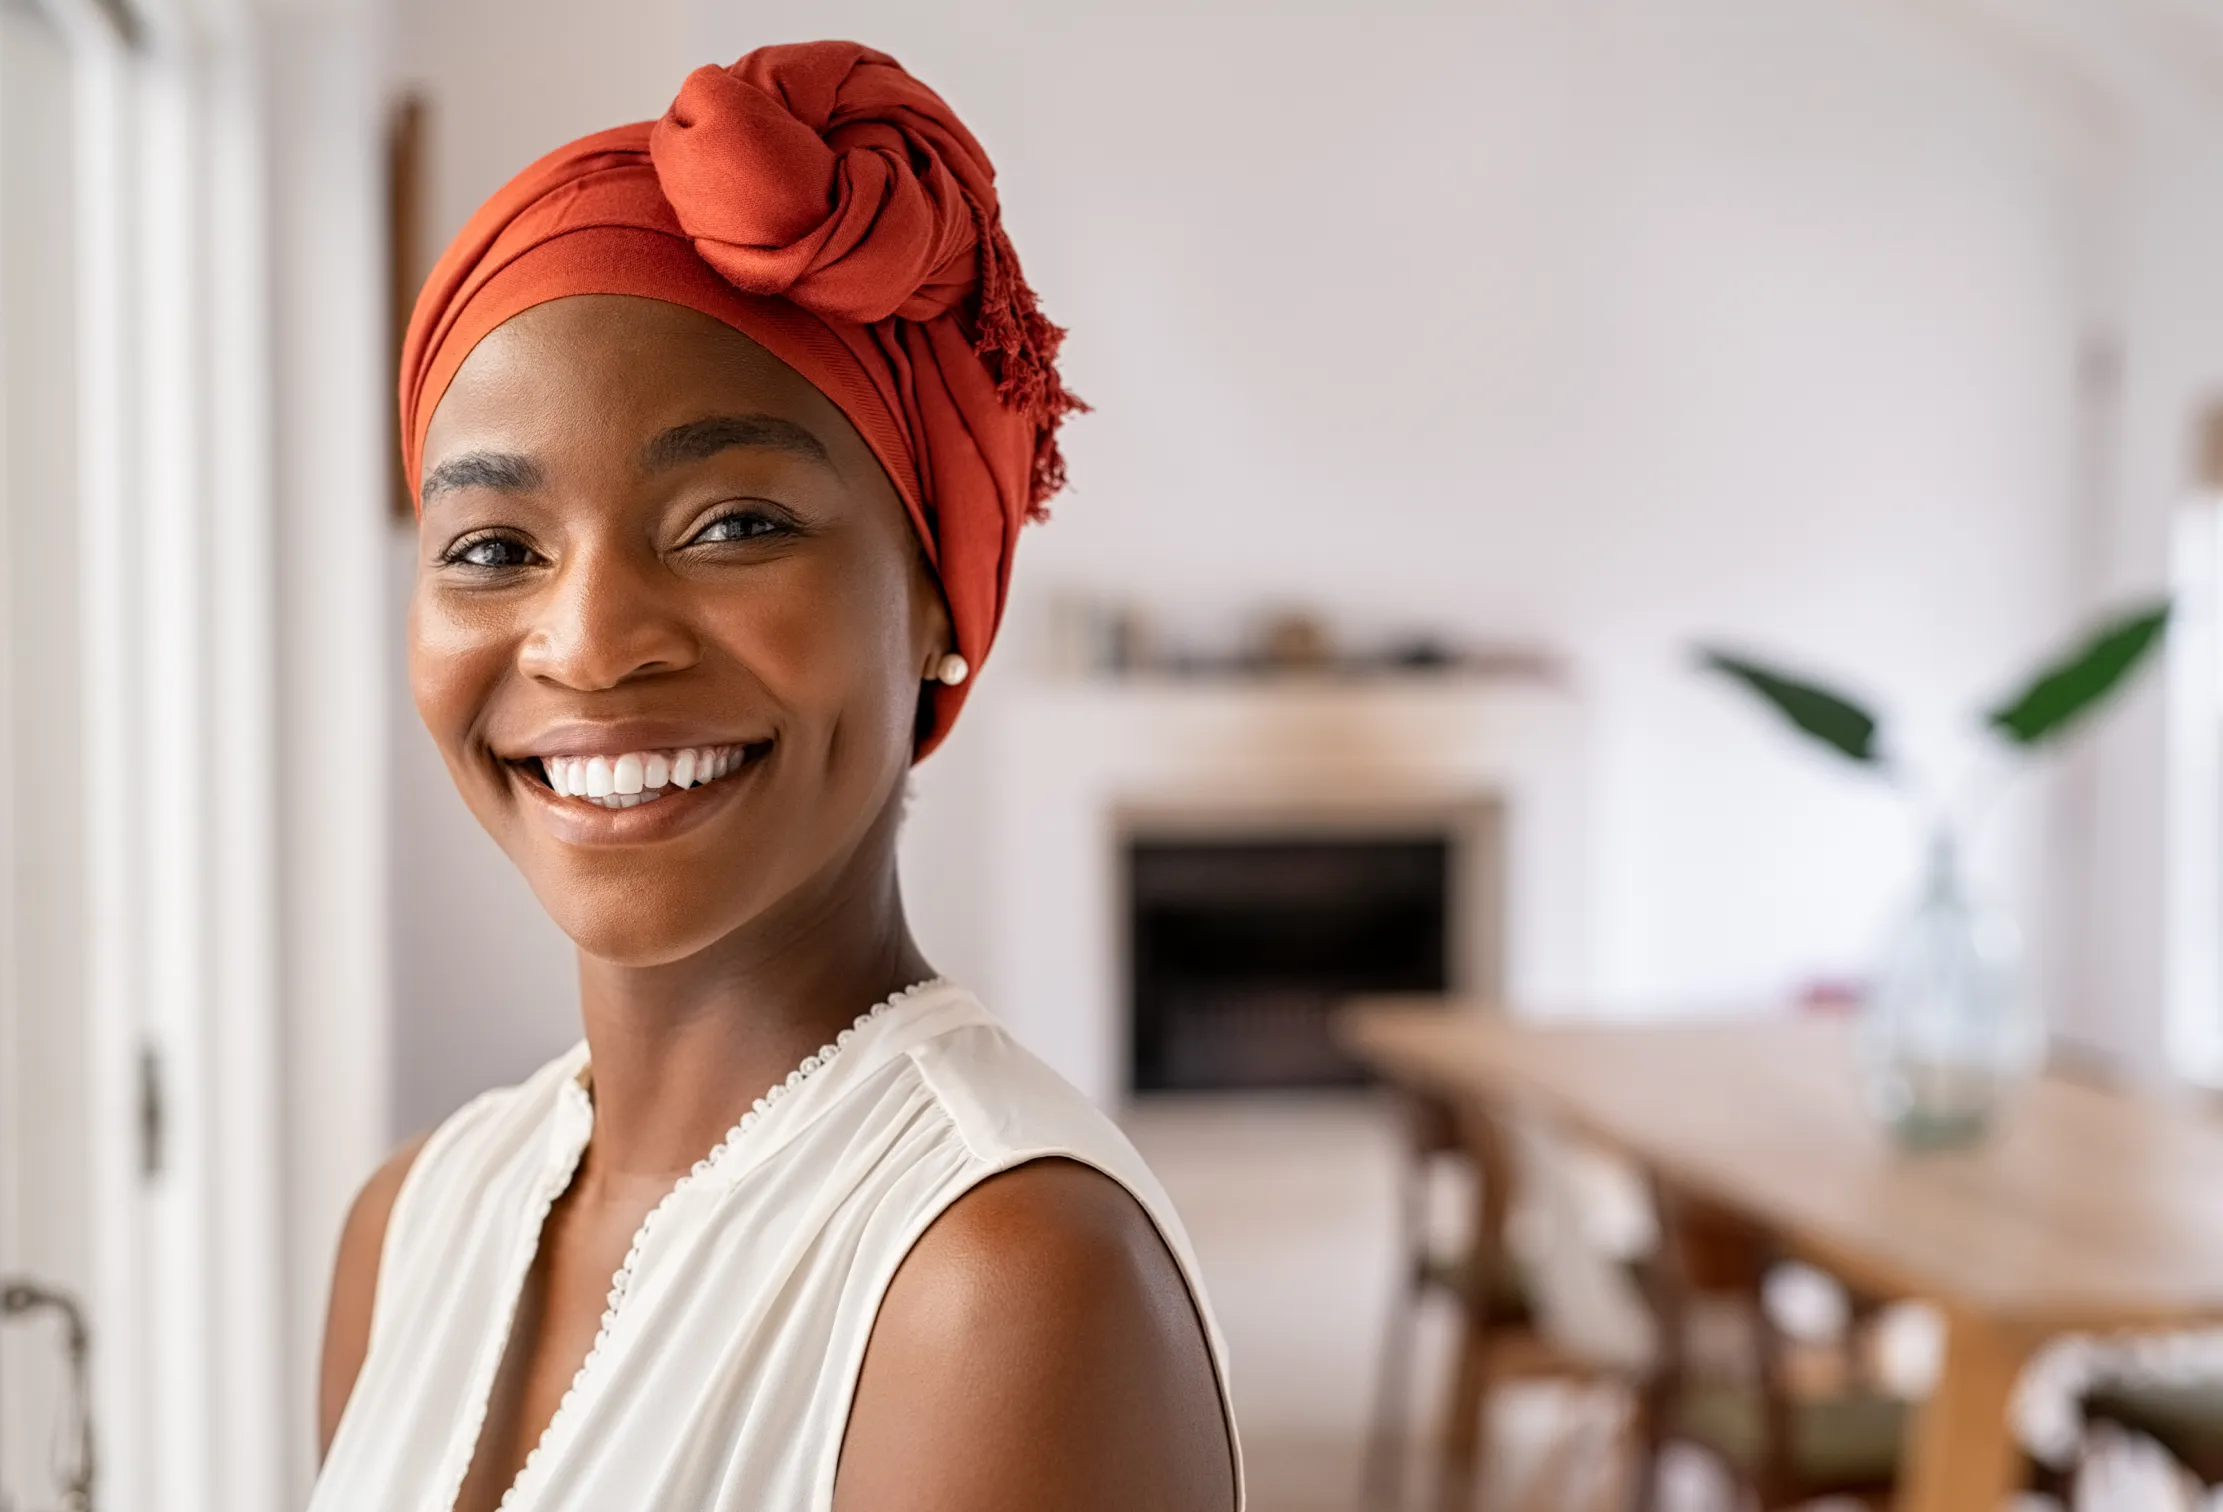 Woman Wearing Headwrap Smiling